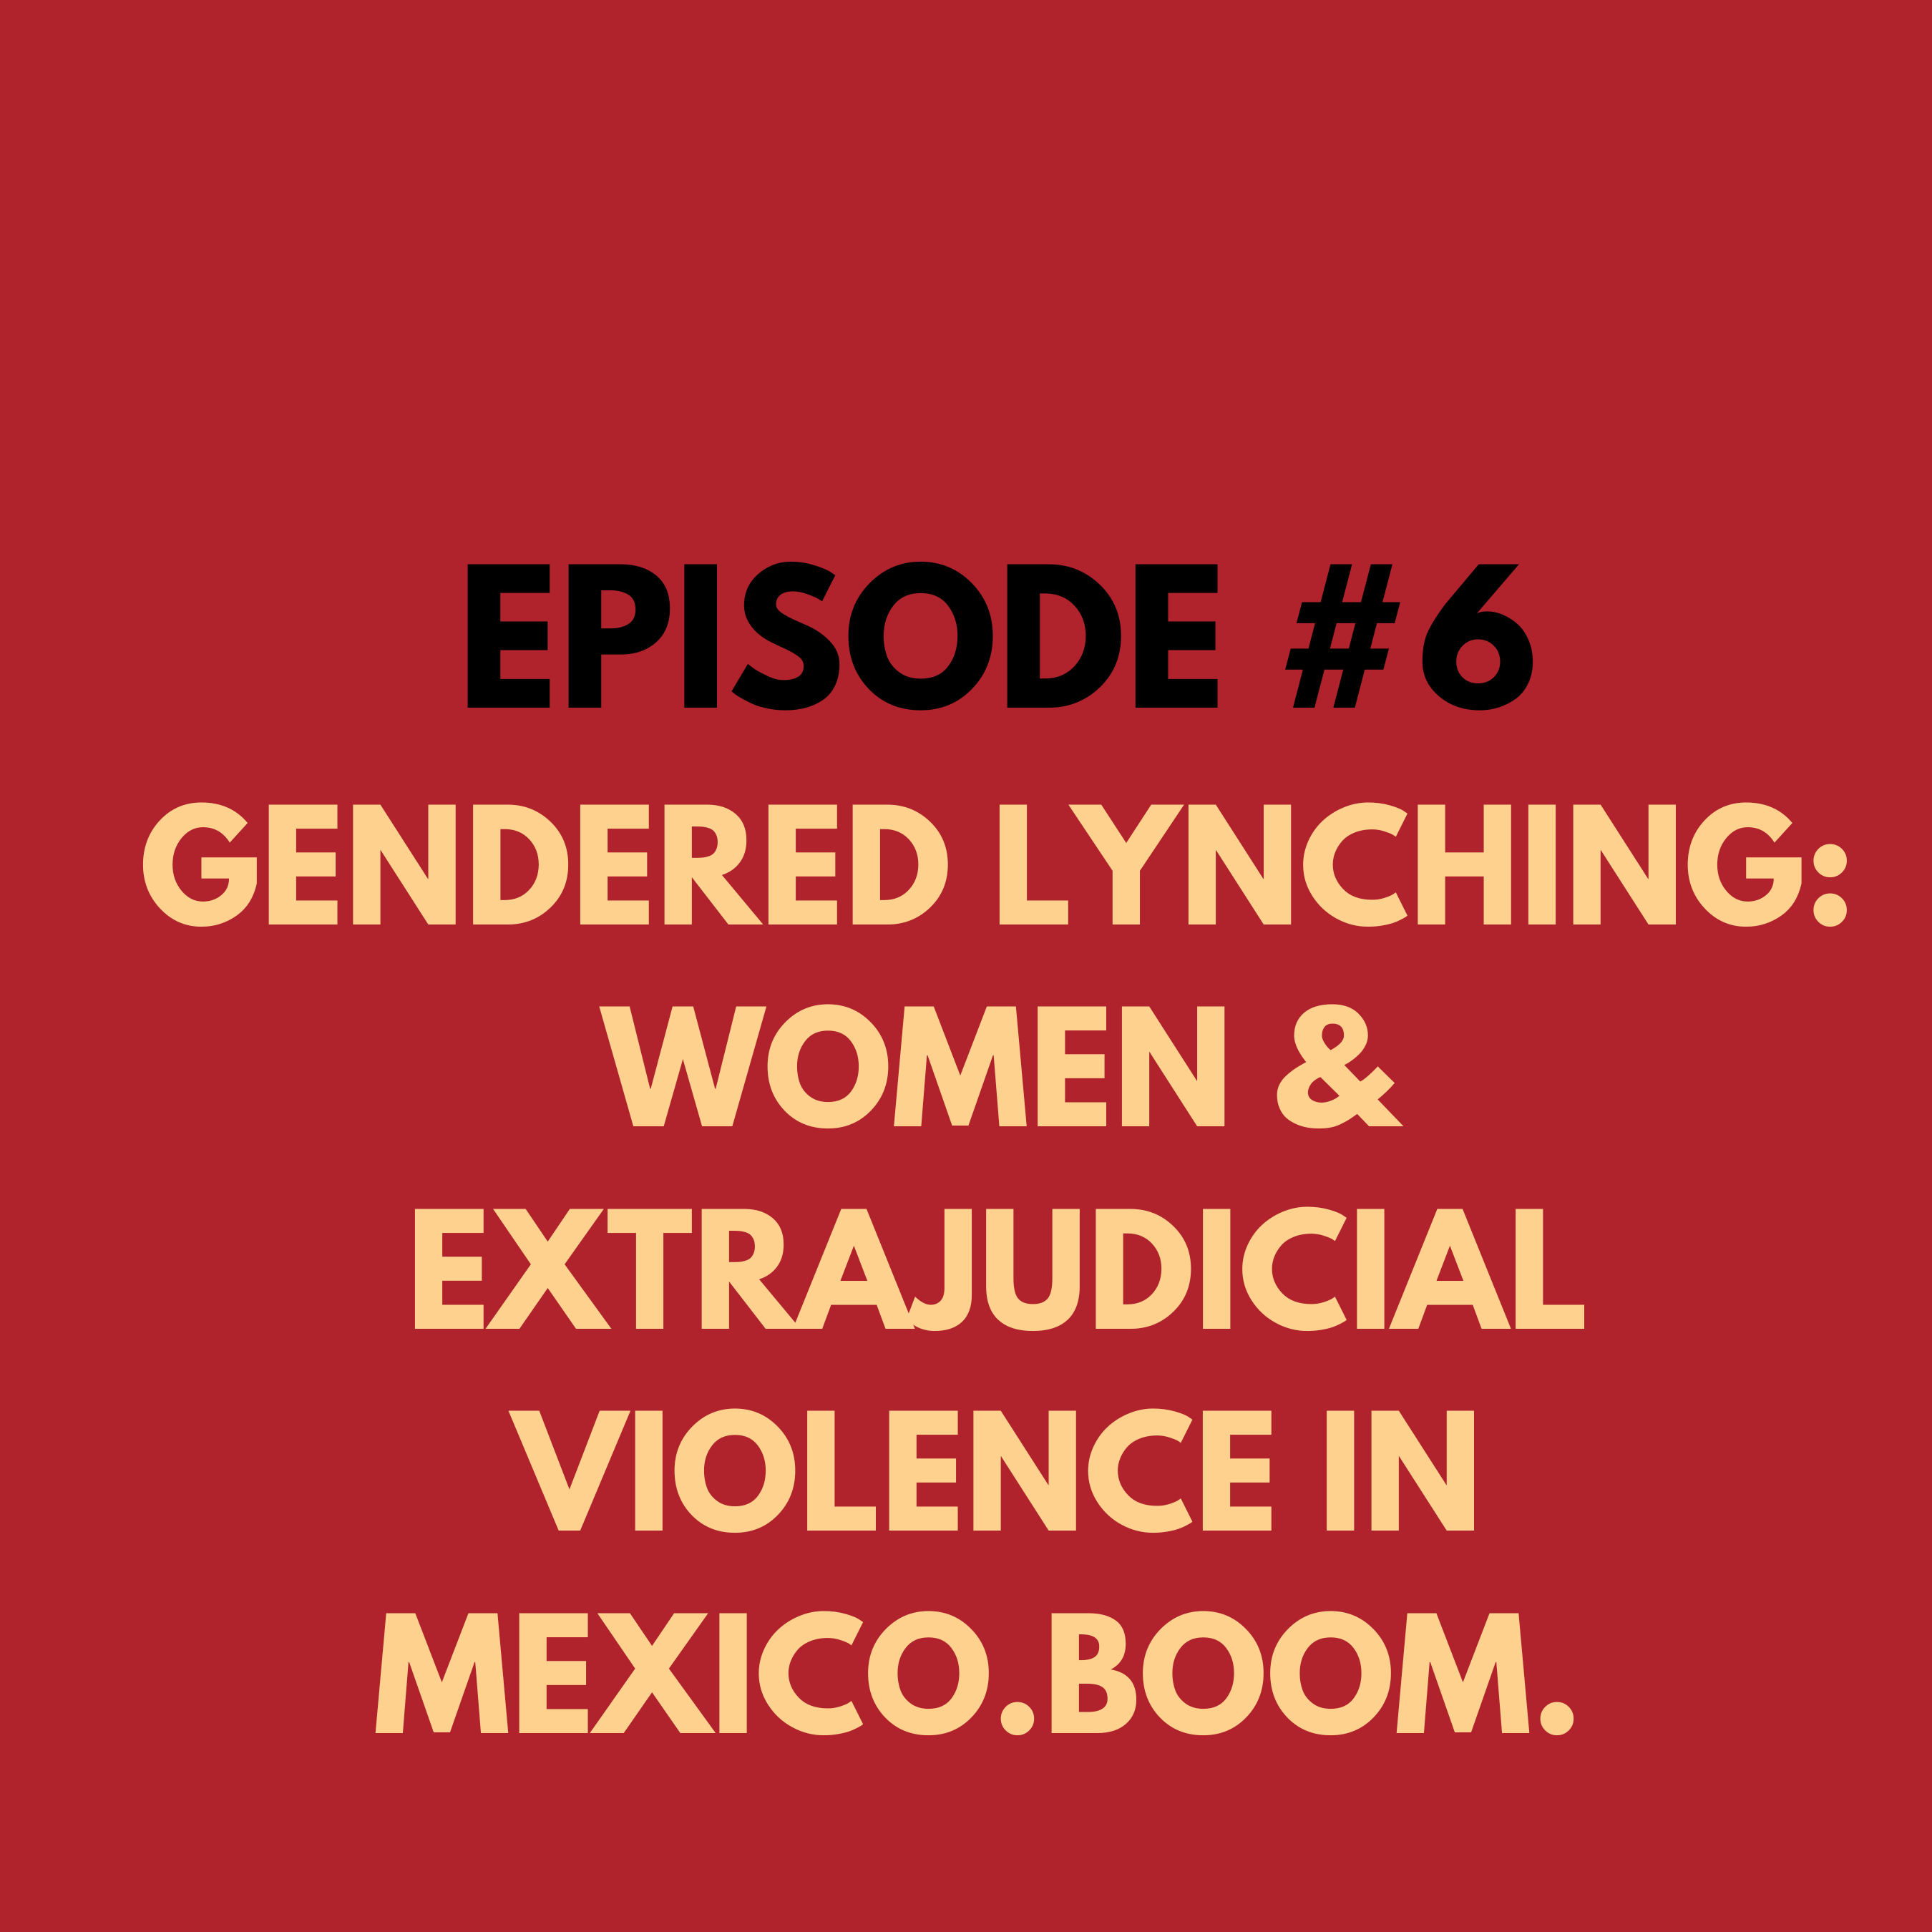 Episode #6 Conversation on Gender , Geography & Violence Against Women